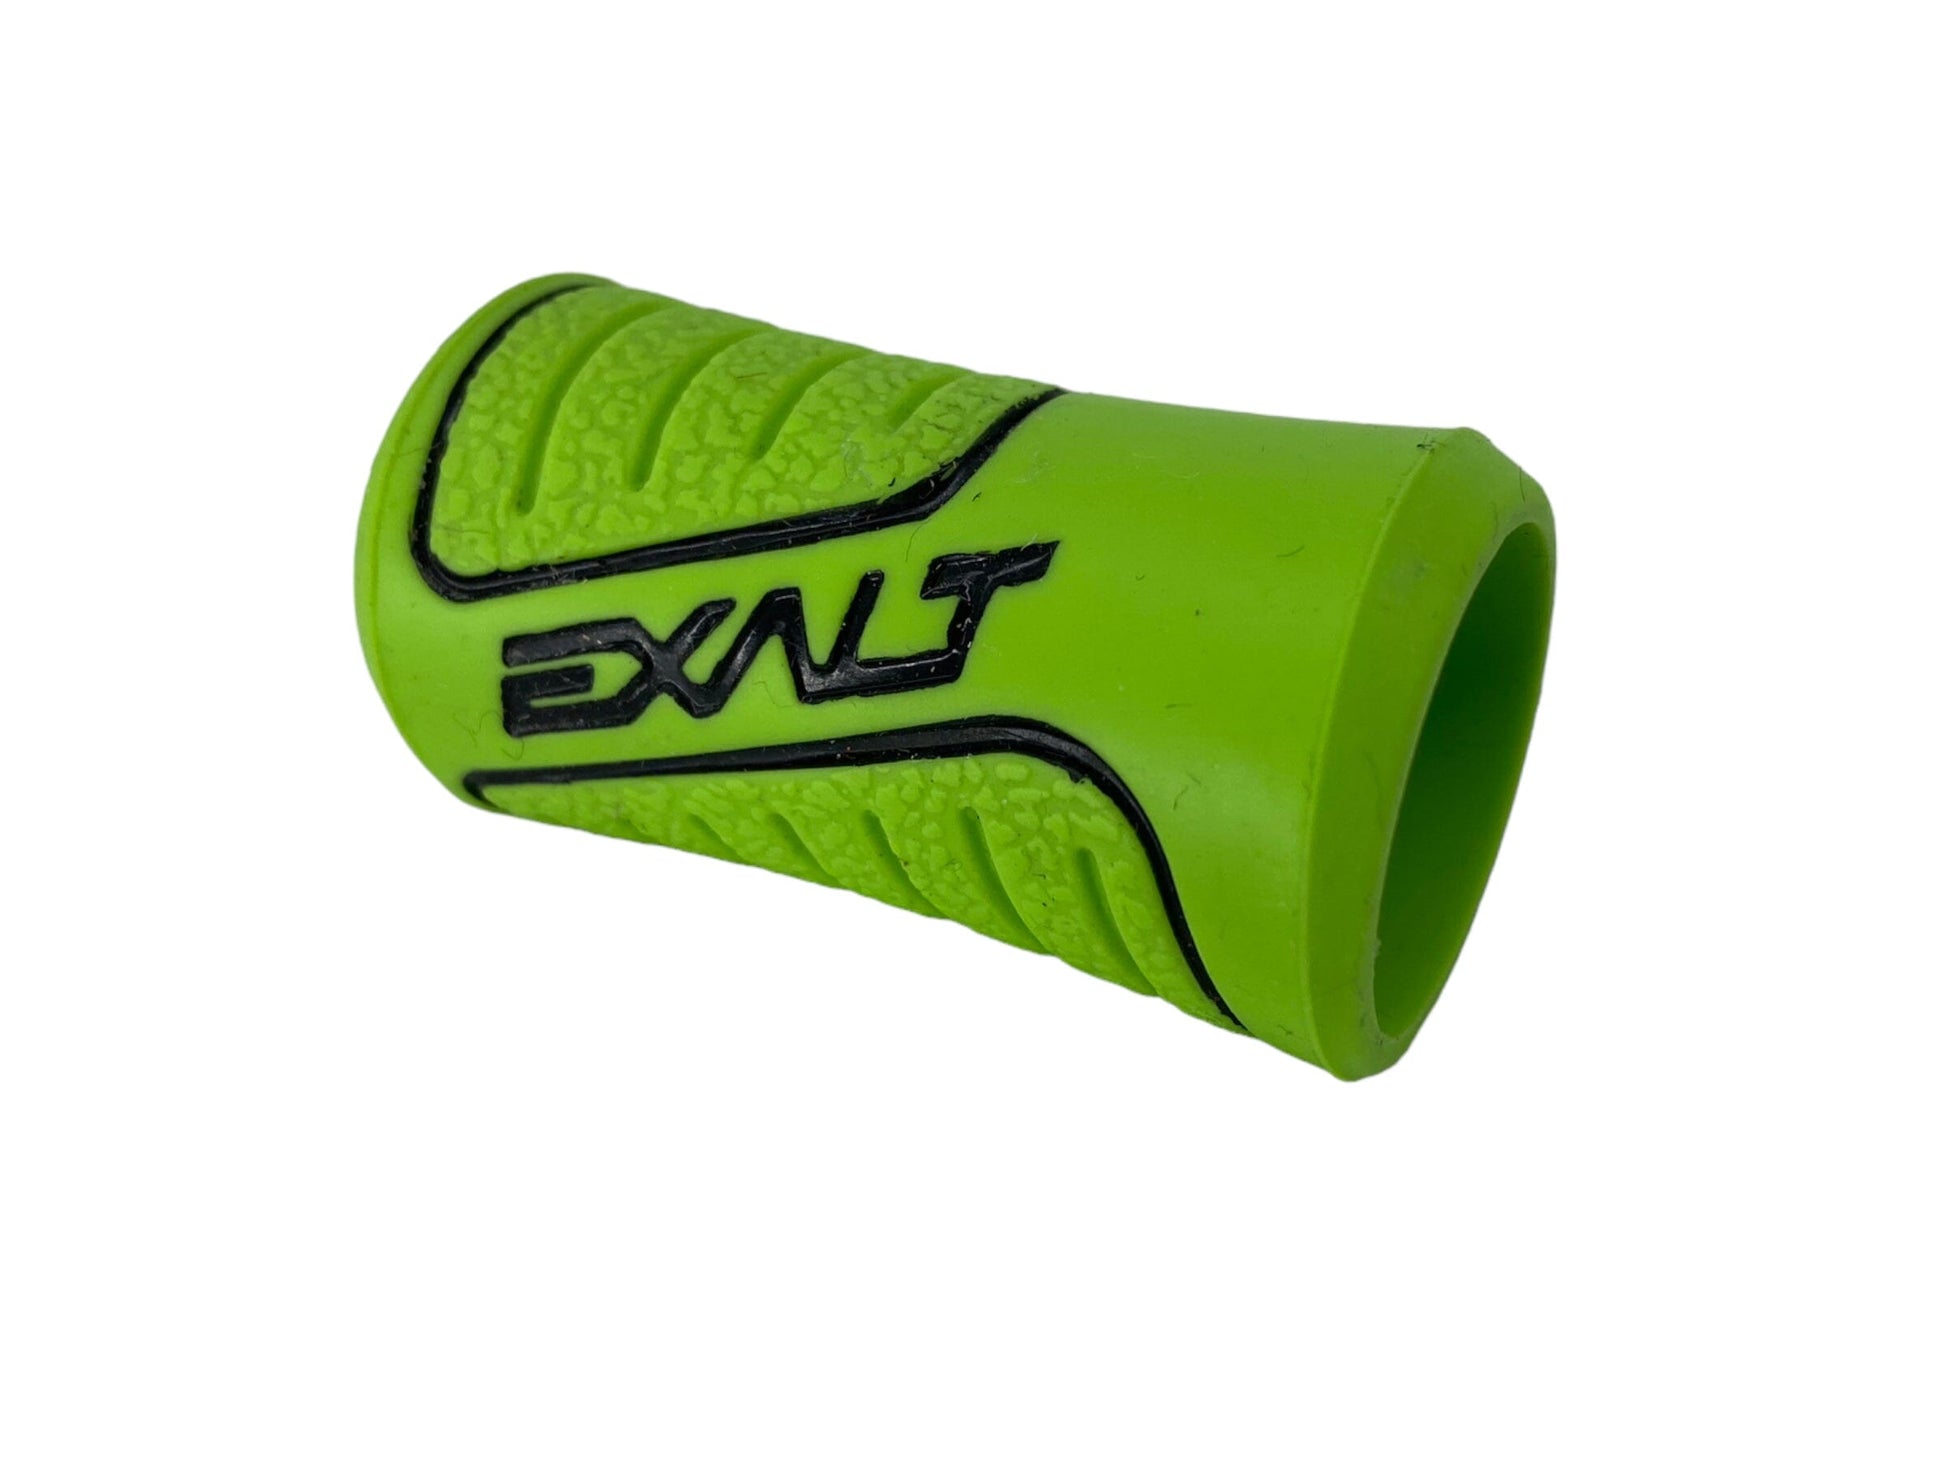 Used Exalt Regulator Grip - Green Paintball Gun from CPXBrosPaintball Buy/Sell/Trade Paintball Markers, Paintball Hoppers, Paintball Masks, and Hormesis Headbands